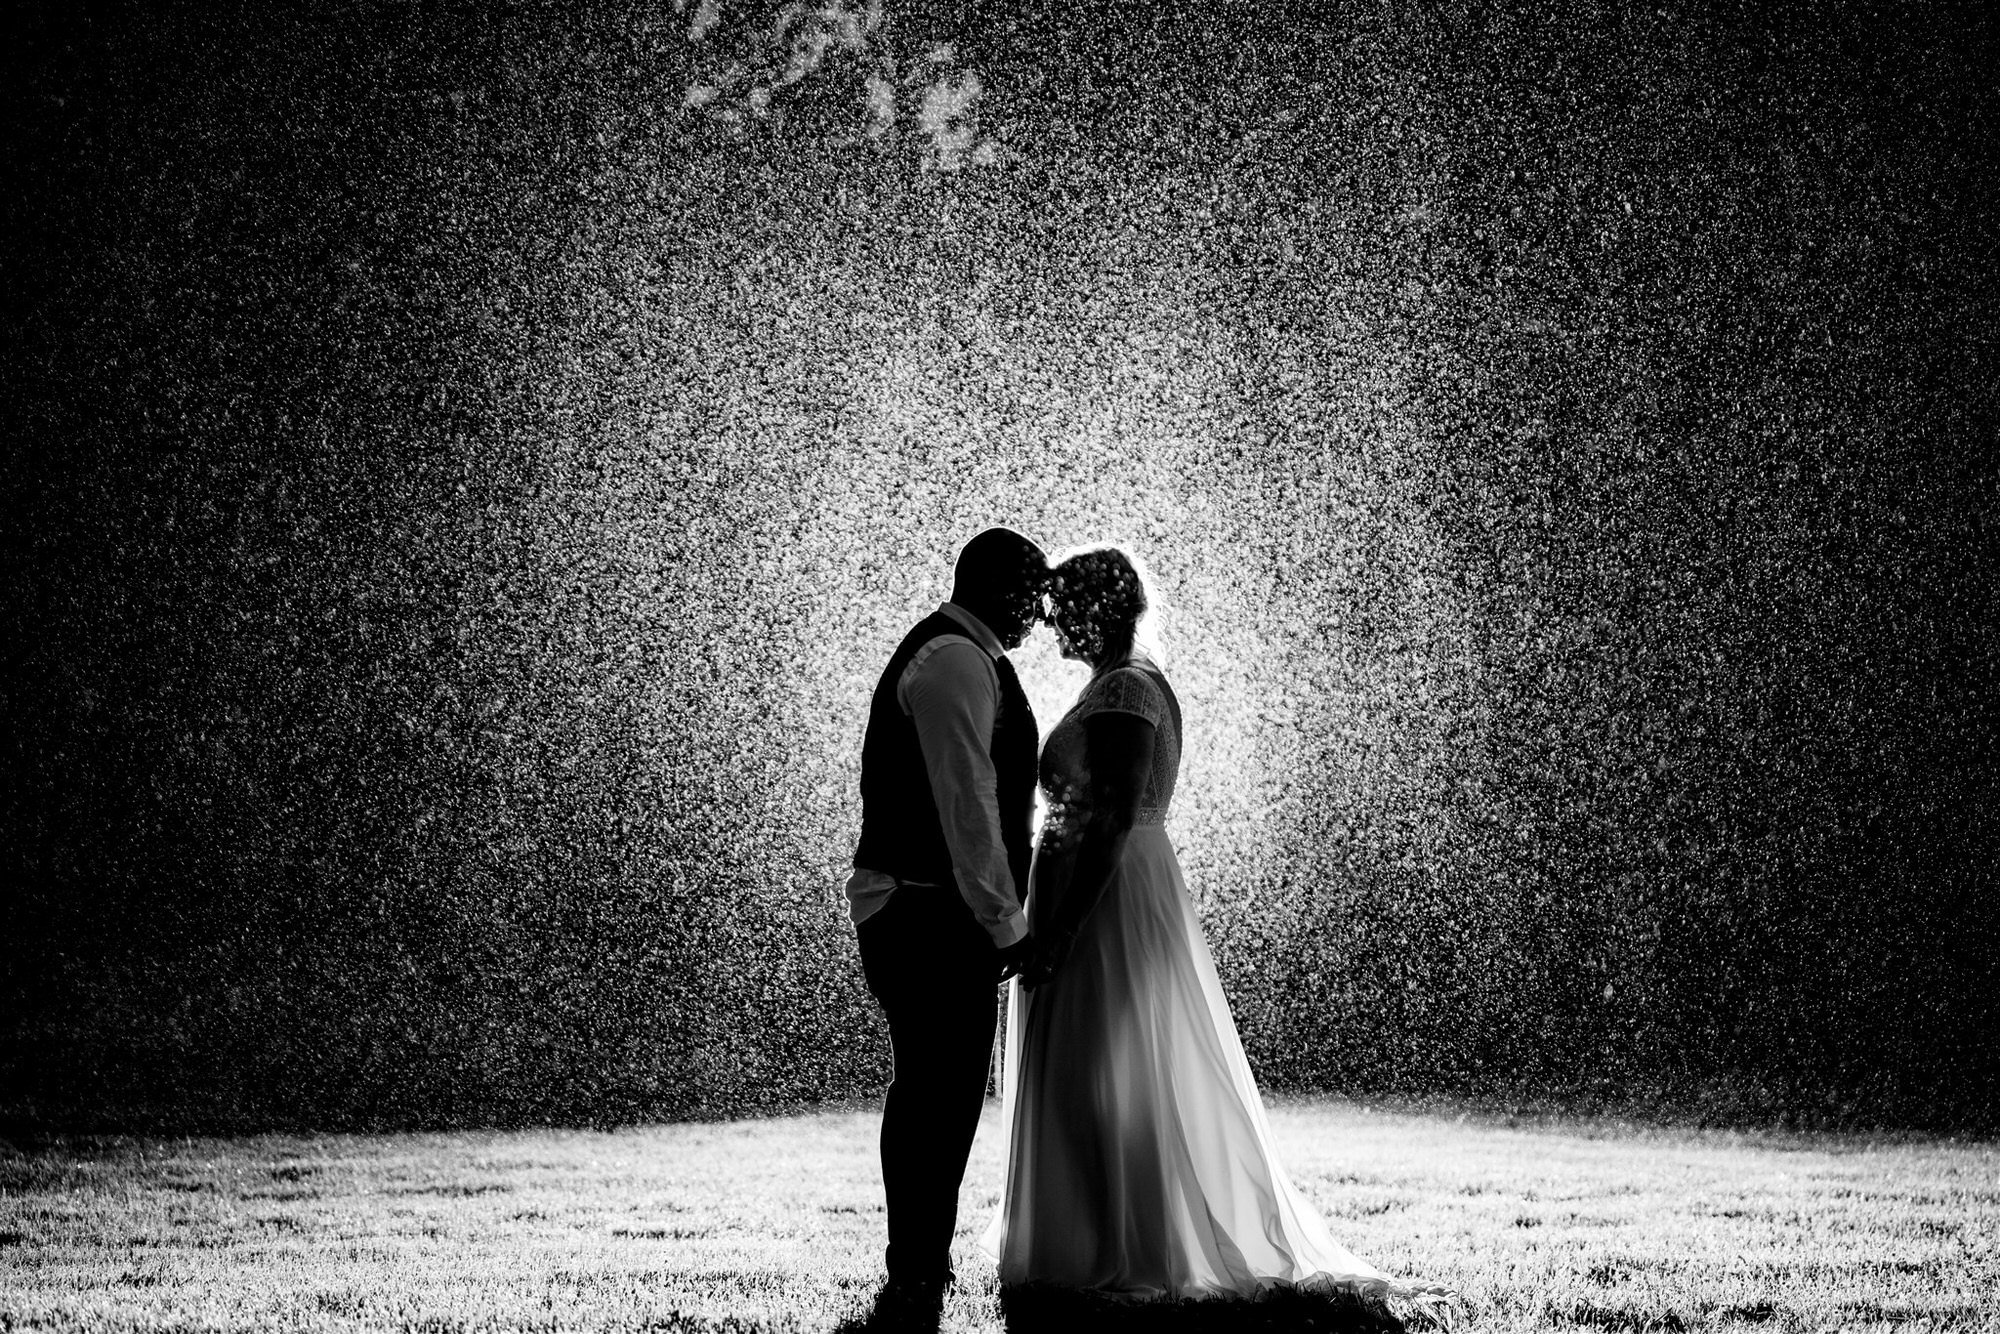 waterfall-farm-auckland-wedding-venue-rainy-day-forest-dear-white-wedding-photographer-wet-gumboot-outdoor-best (109).jpg